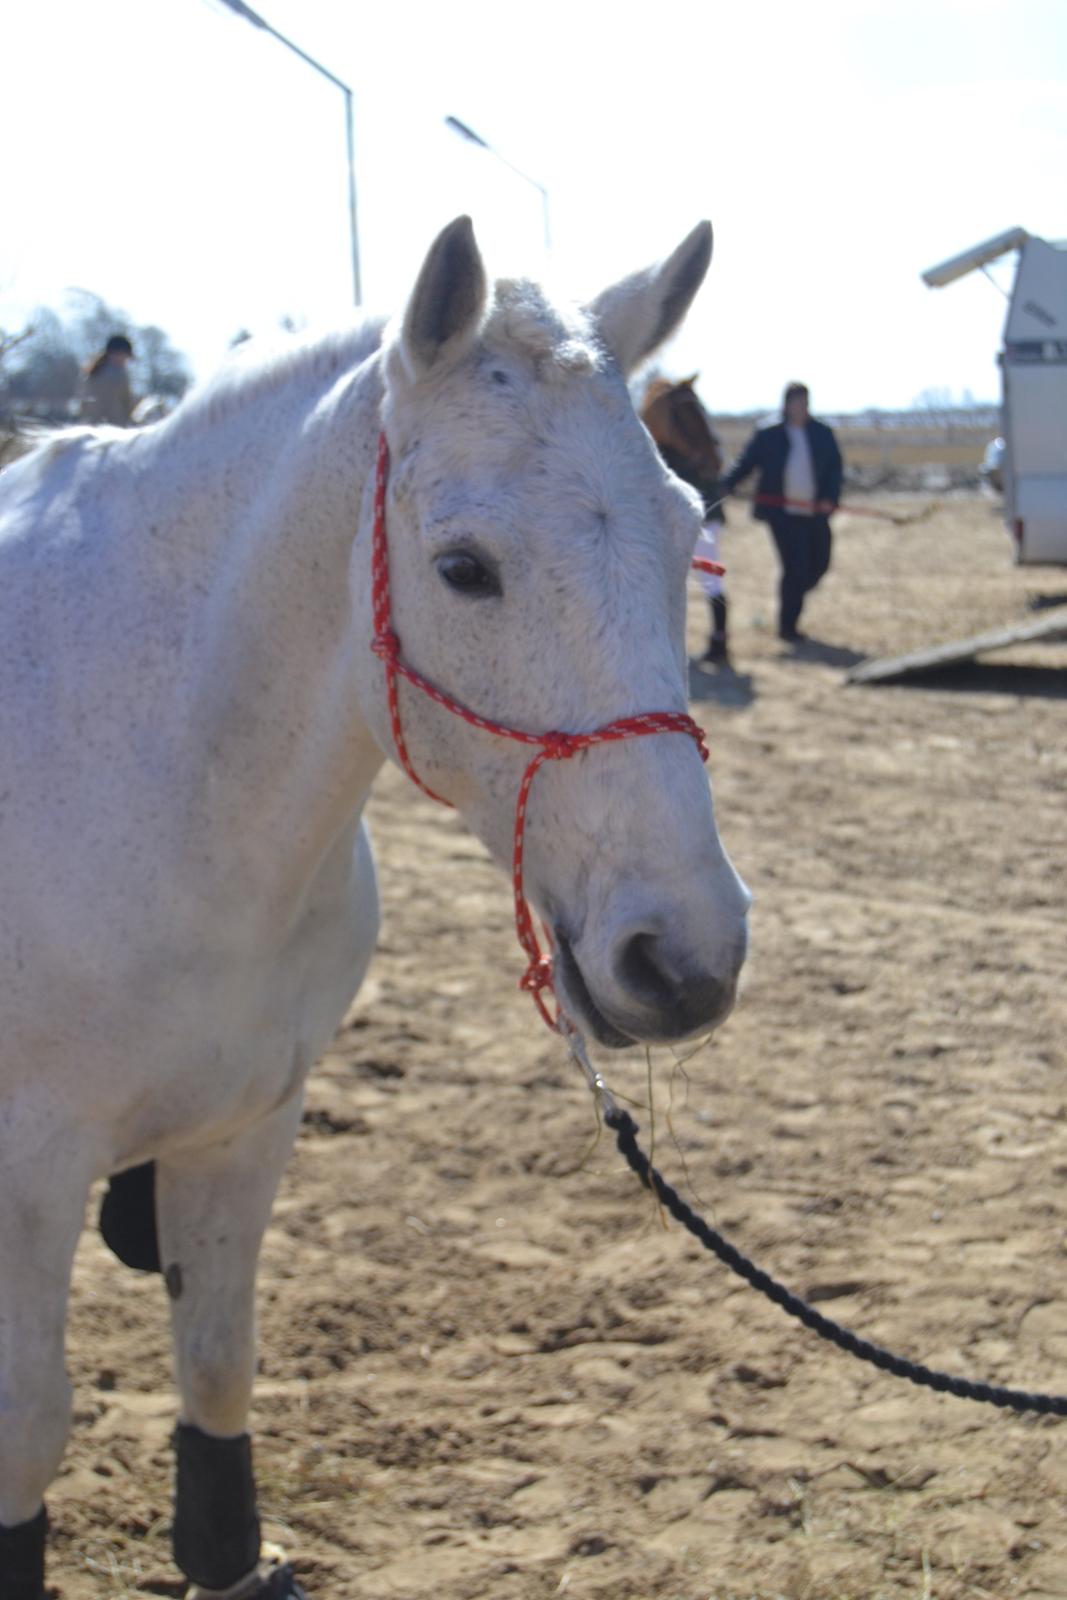 Connemara Hesselholt's Casano B-pony - Smukke pony, imellem klasserne :-) billede 19